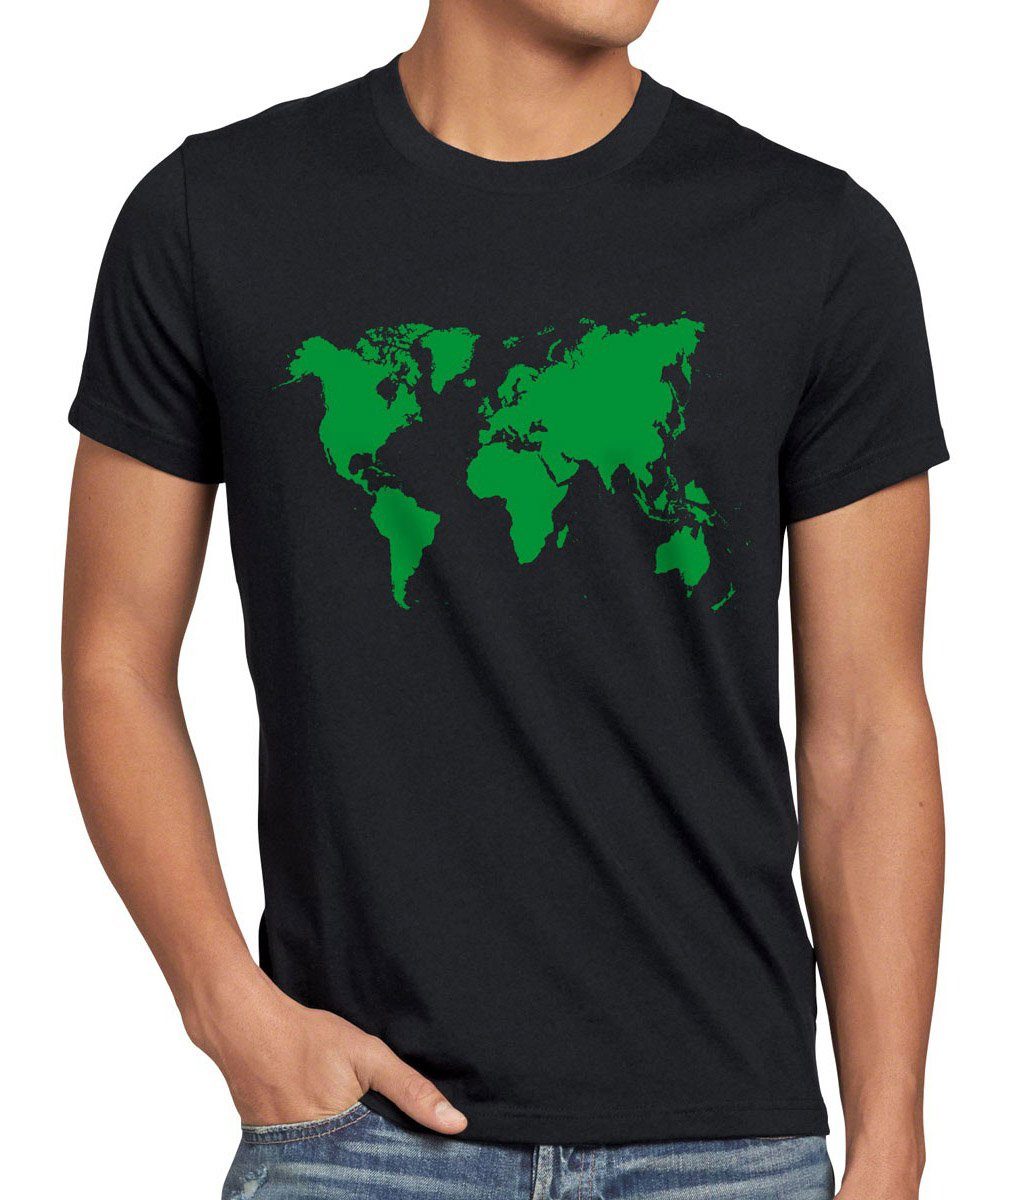 bang big Print-Shirt karte Herren Weltkarte World schwarz T-Shirt geo style3 Map cooper theory welt Sheldon